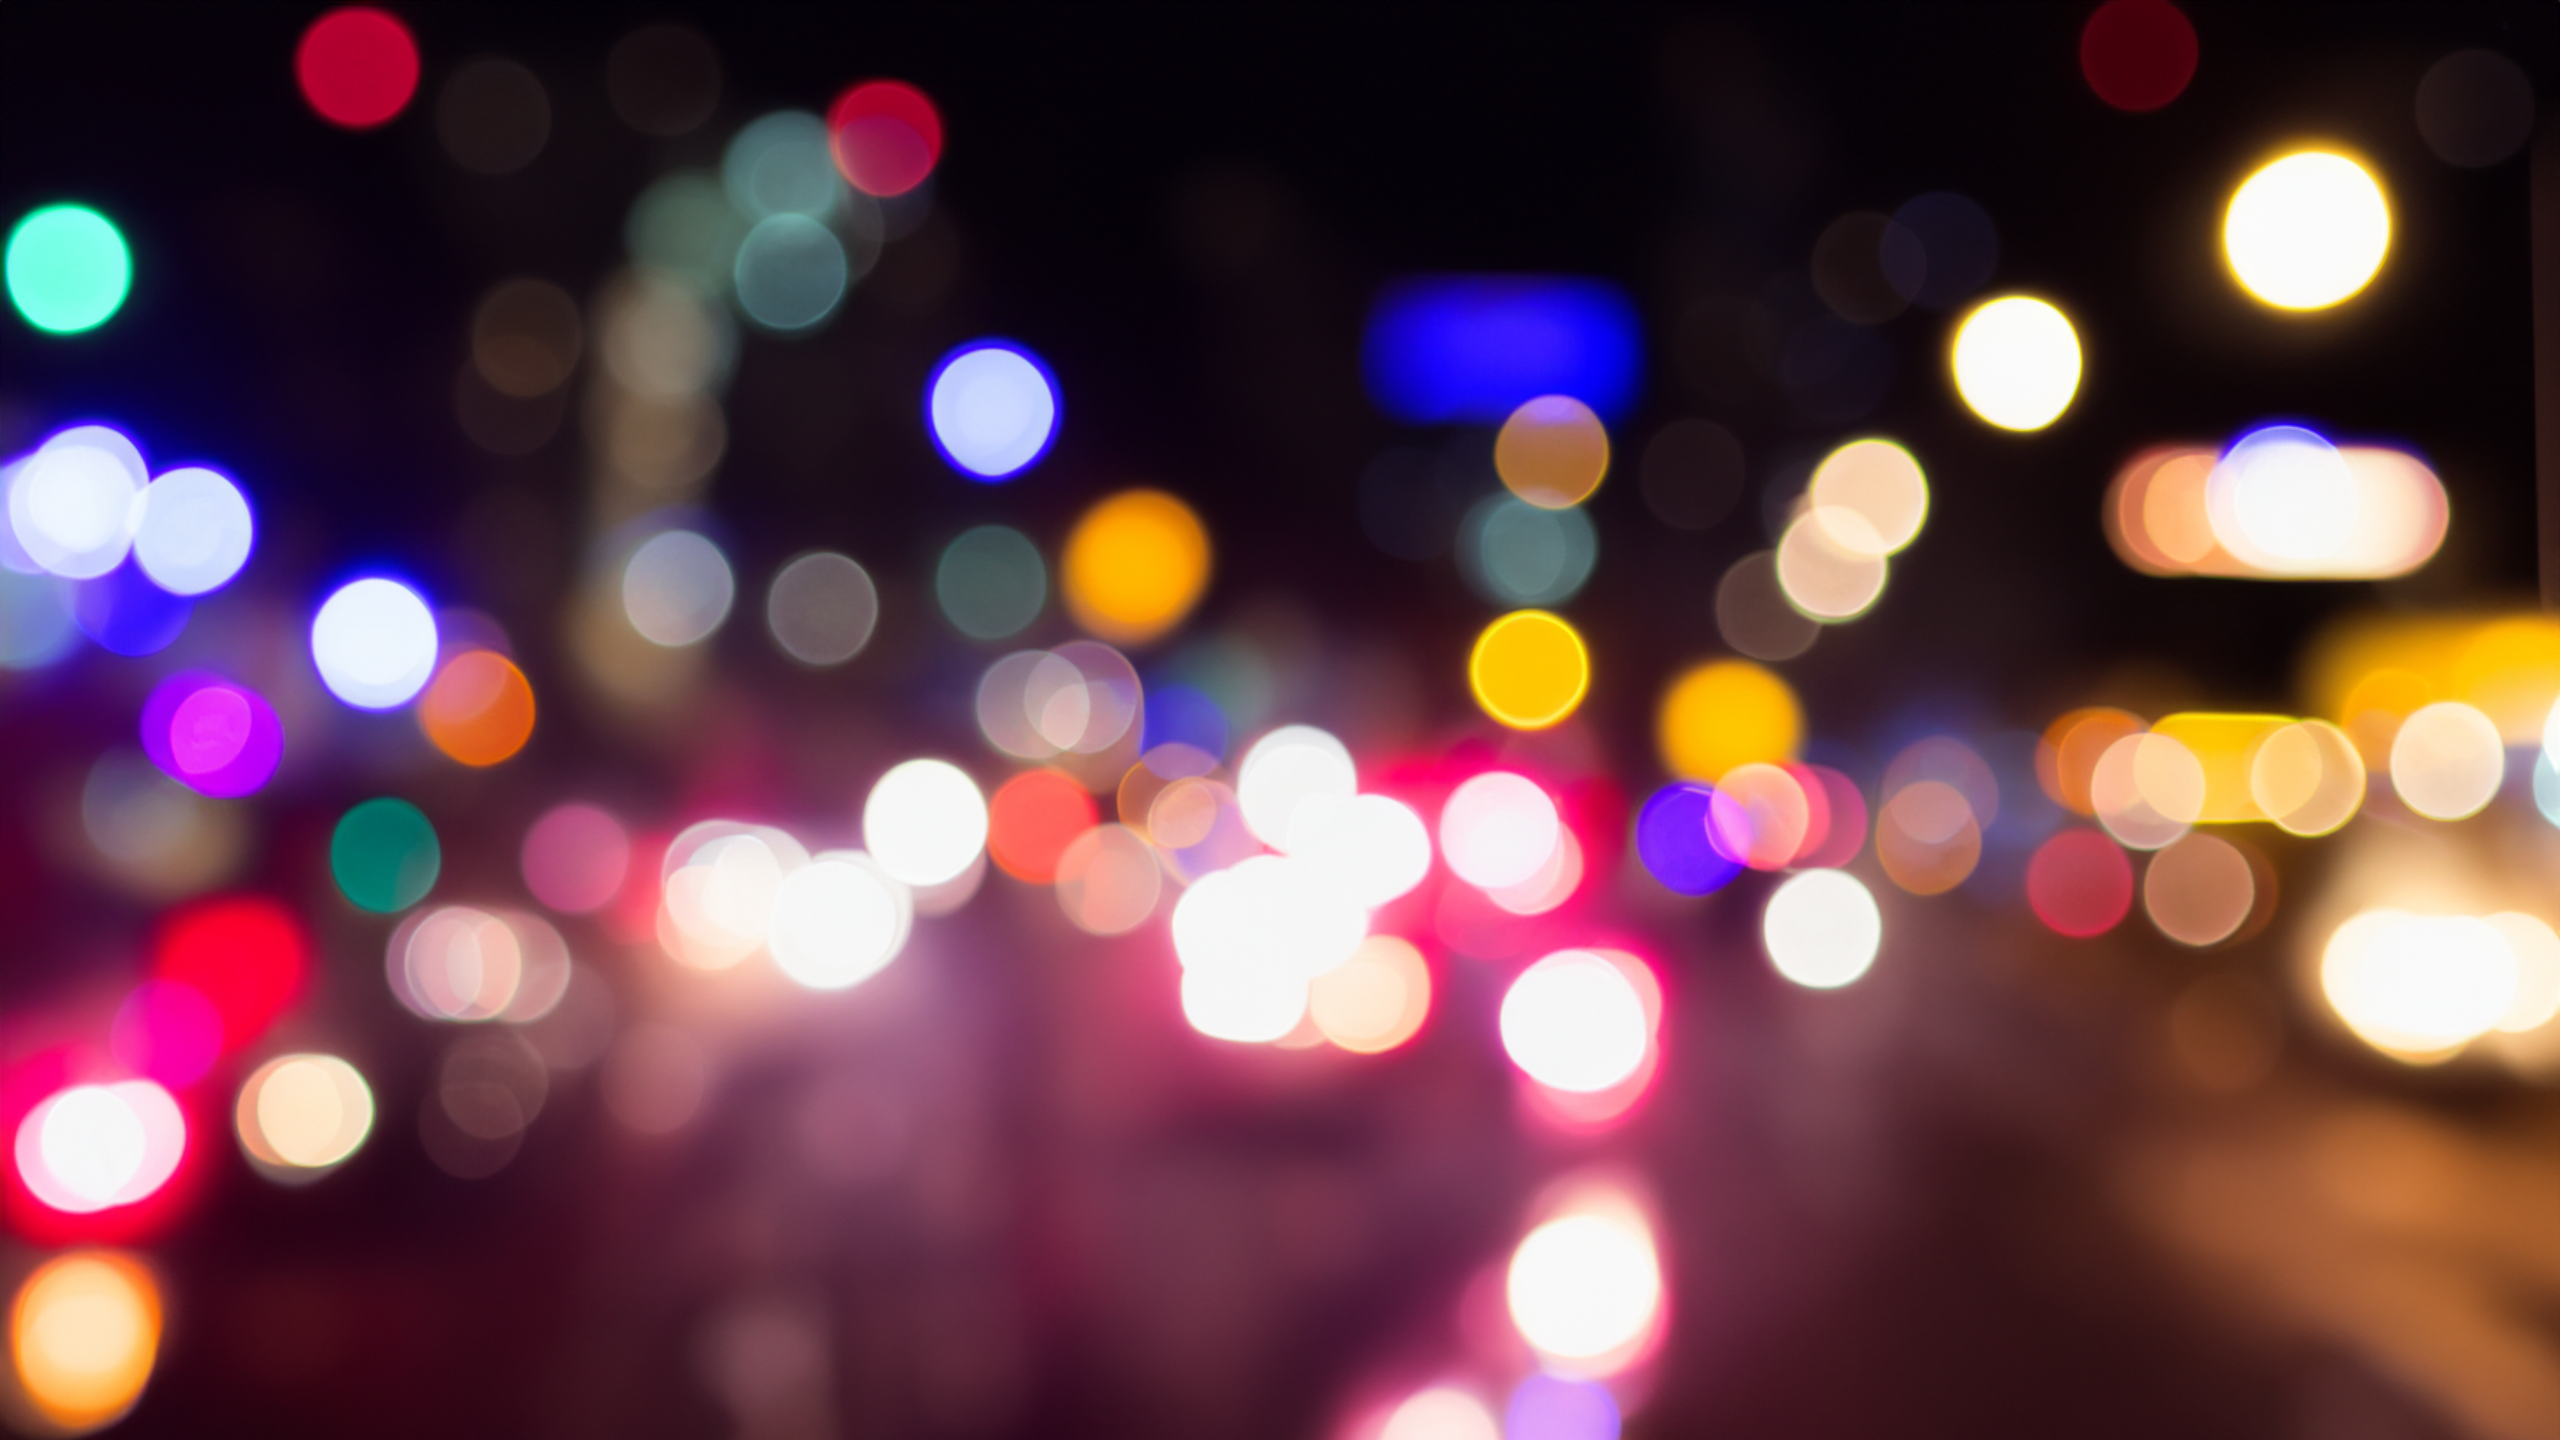 General 2560x1440 bokeh traffic city lights minimalism blurred blurry background simple background